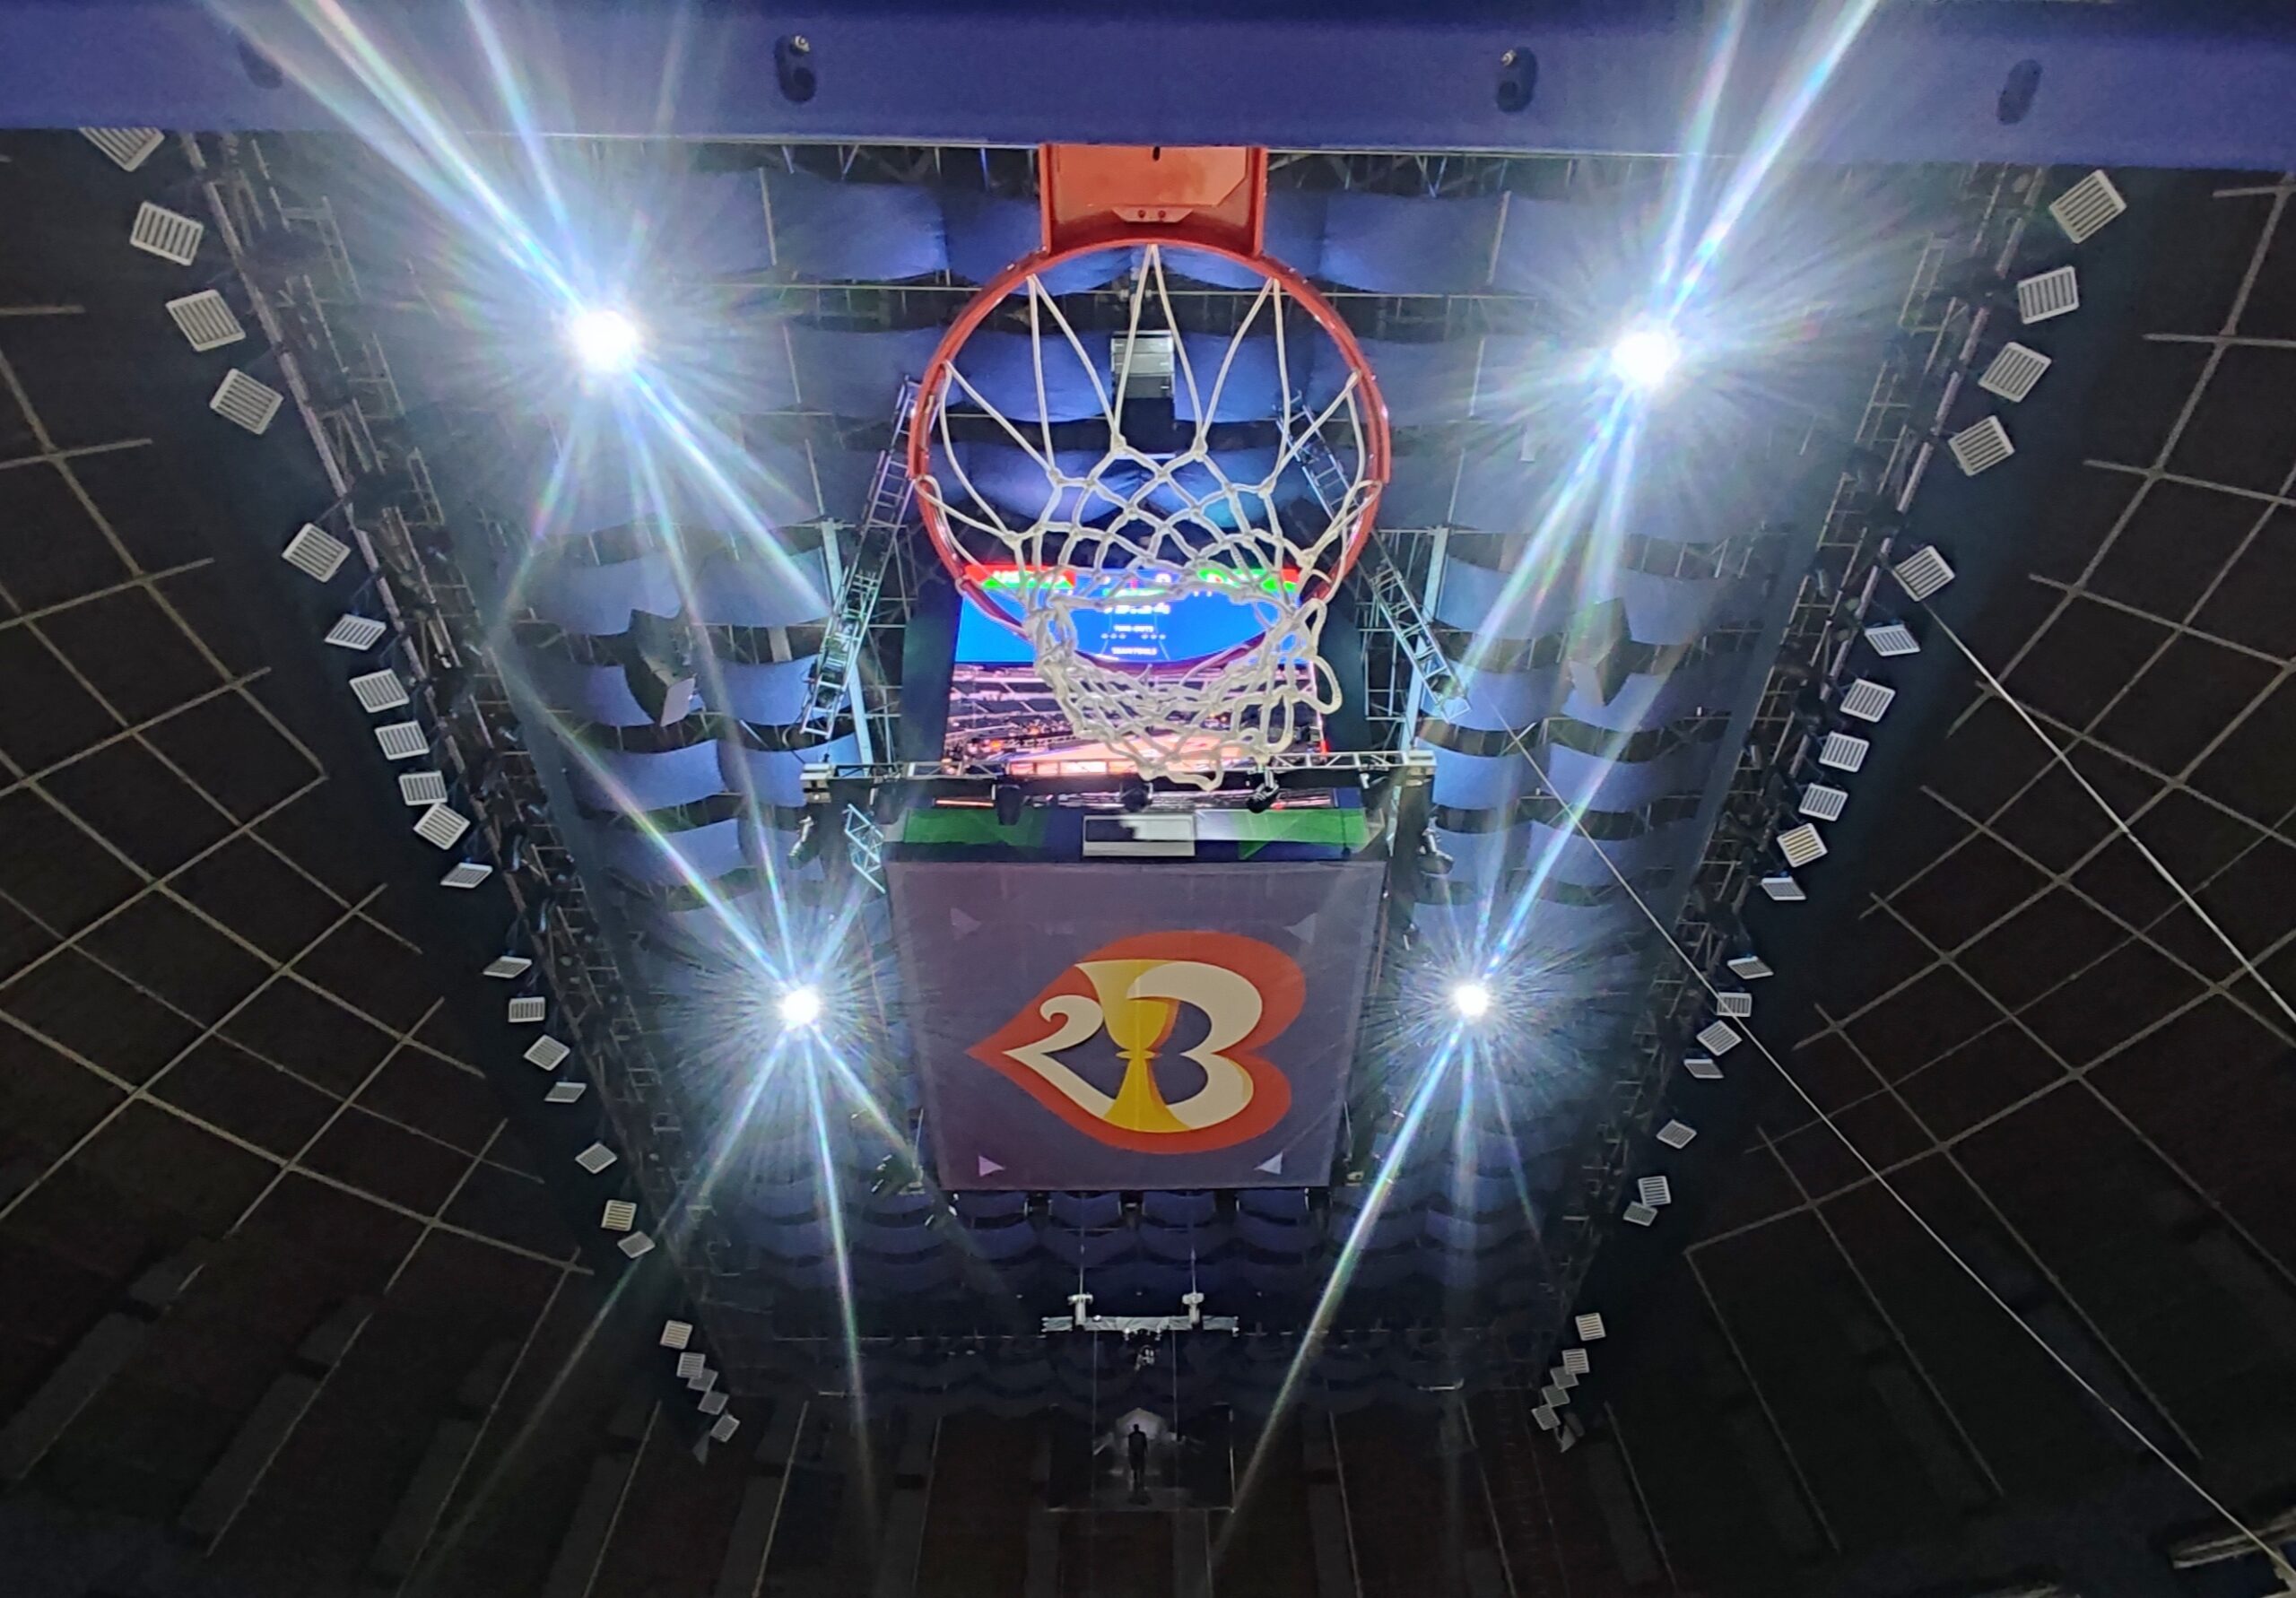 Coliseum undergoes major renovations for Fiba World Cup